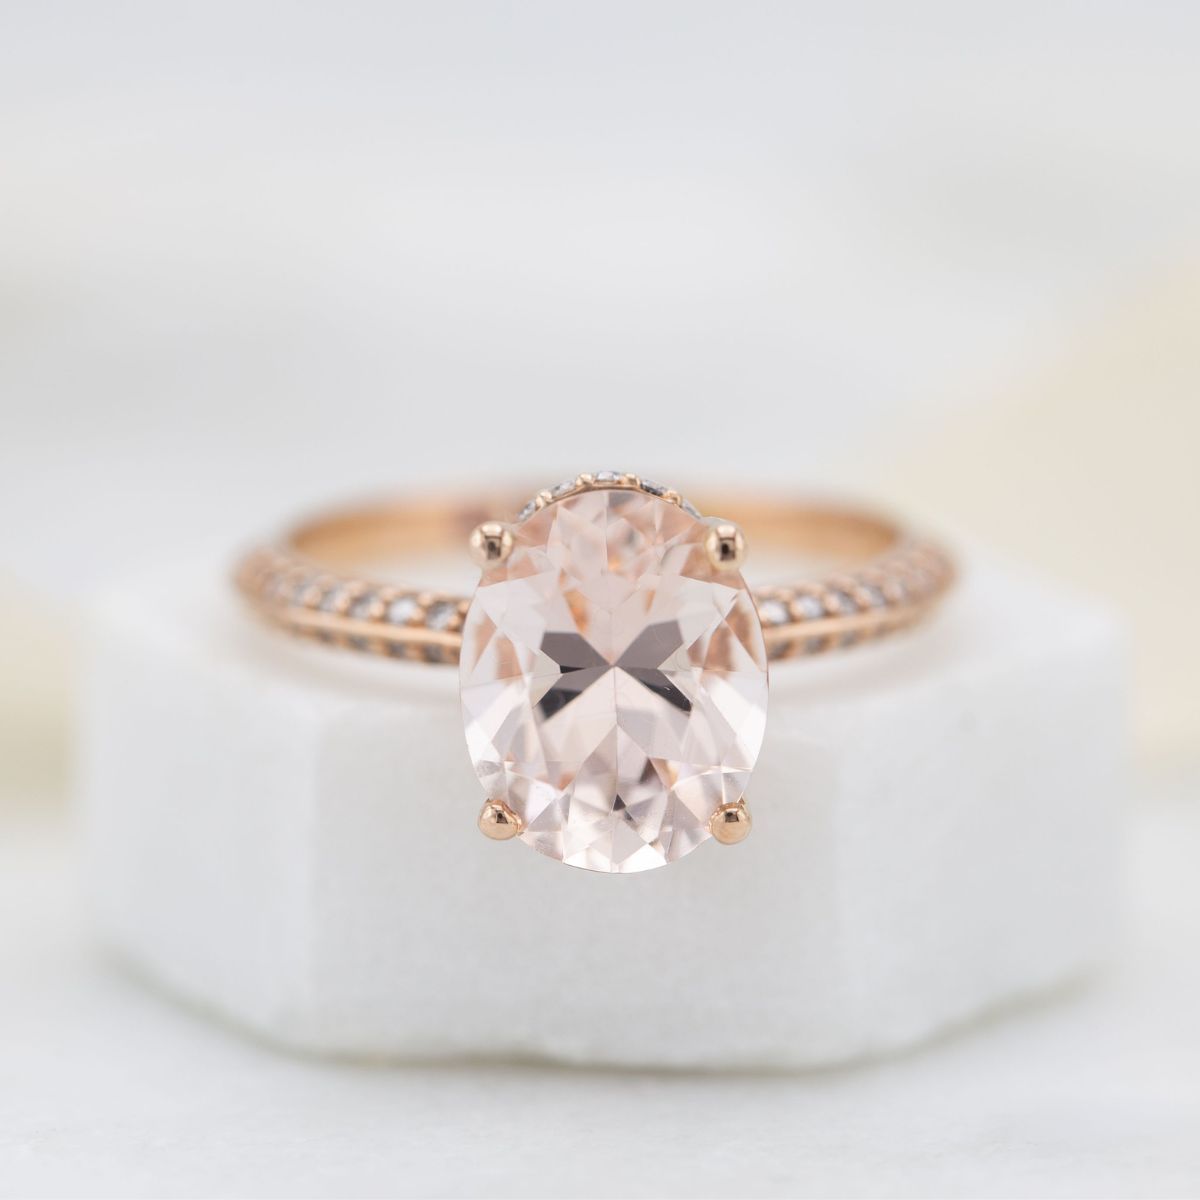 Hidden halo engagement ring designs | CustomMade.com